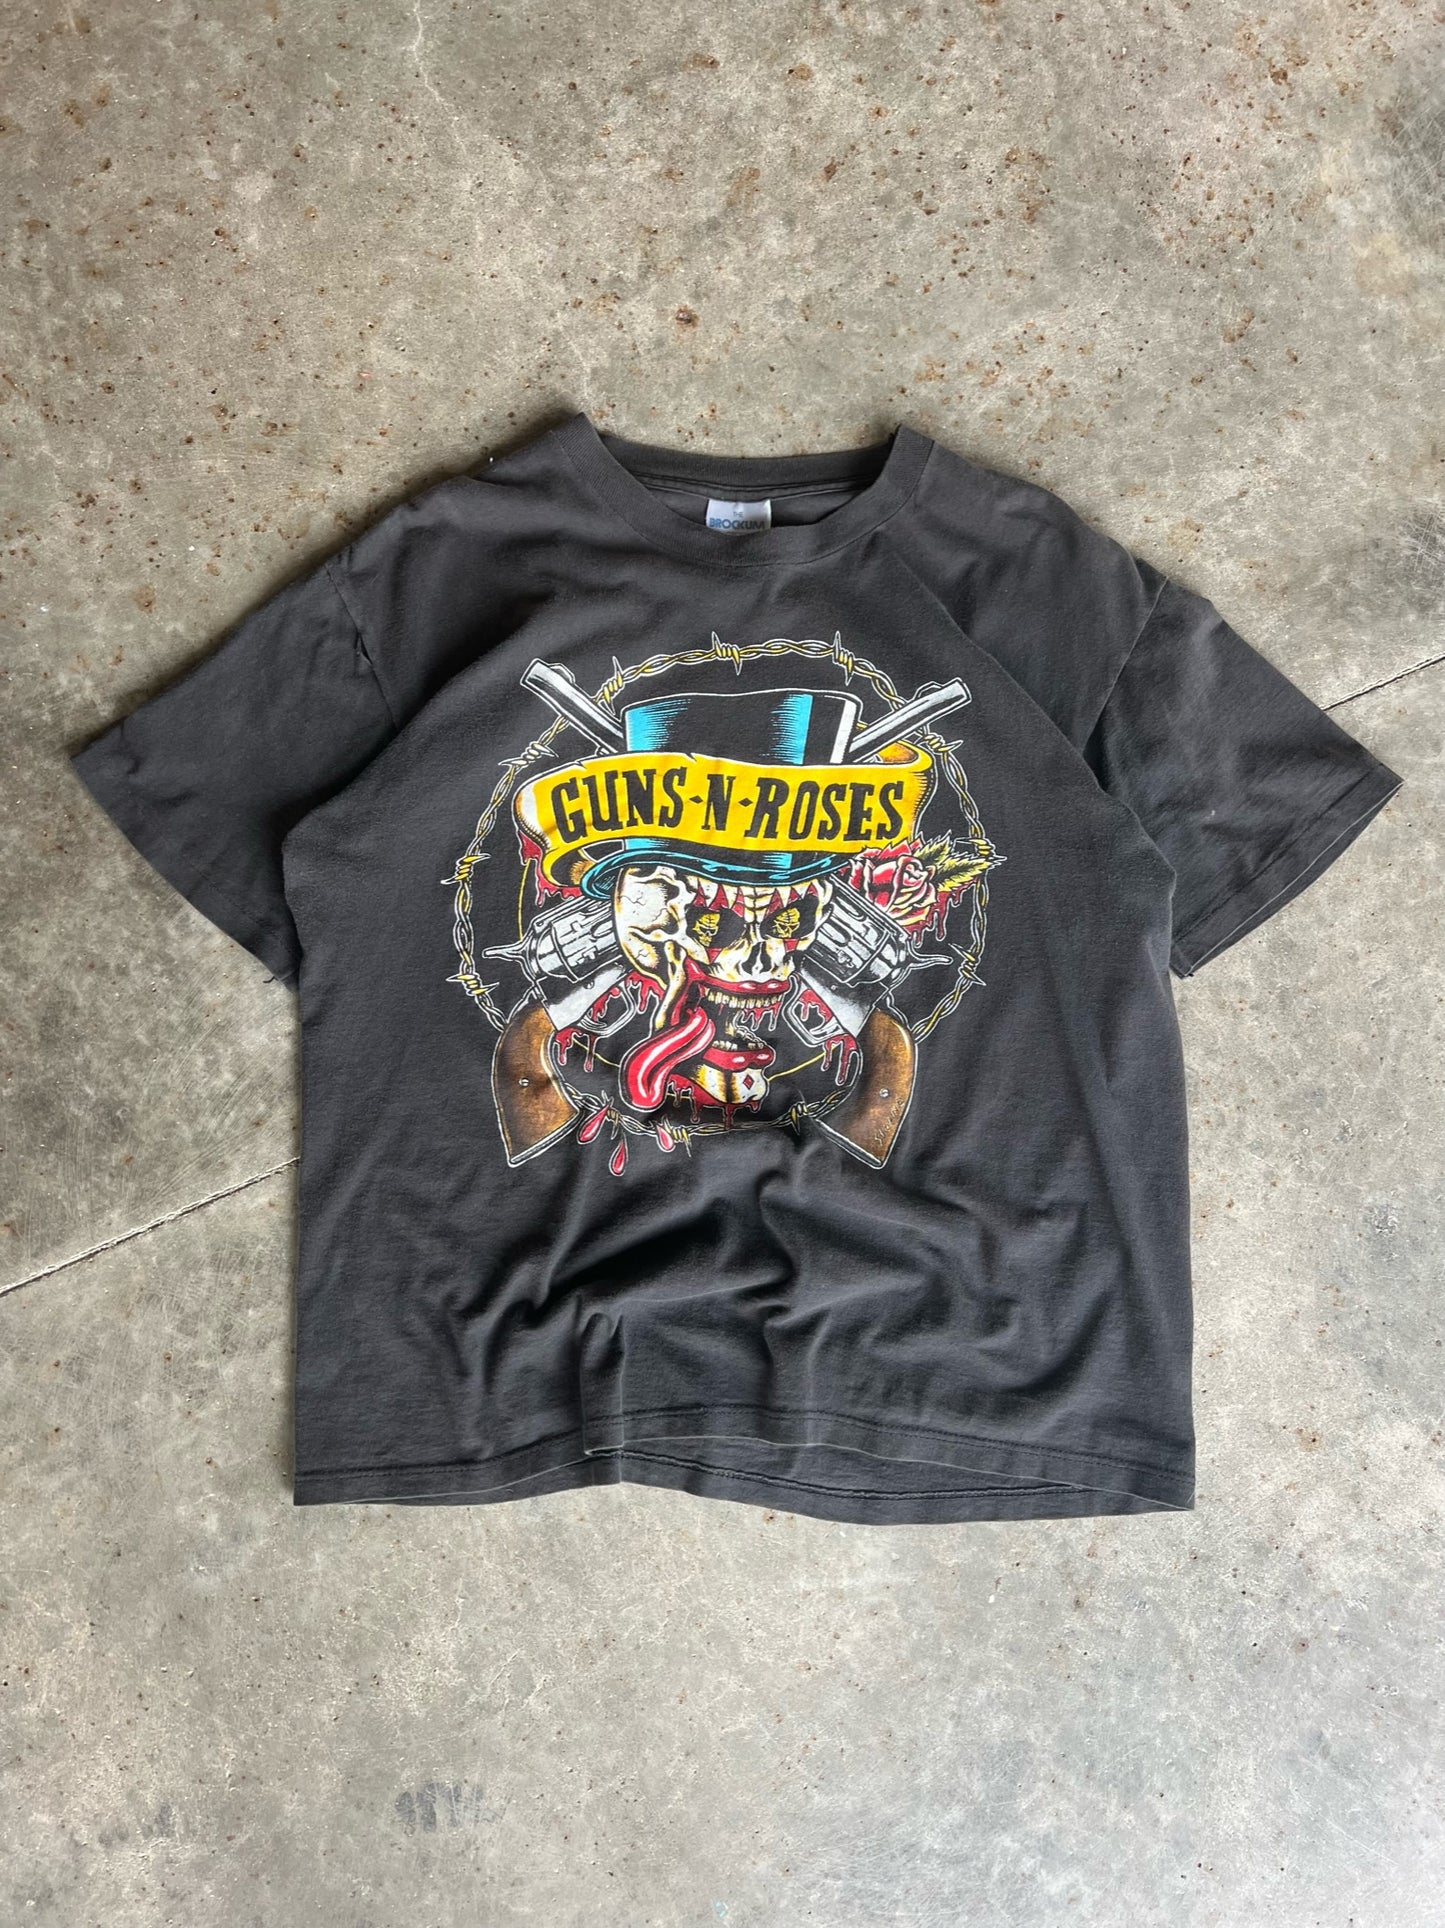 Vintage Guns-N-Roses Shirt - XL